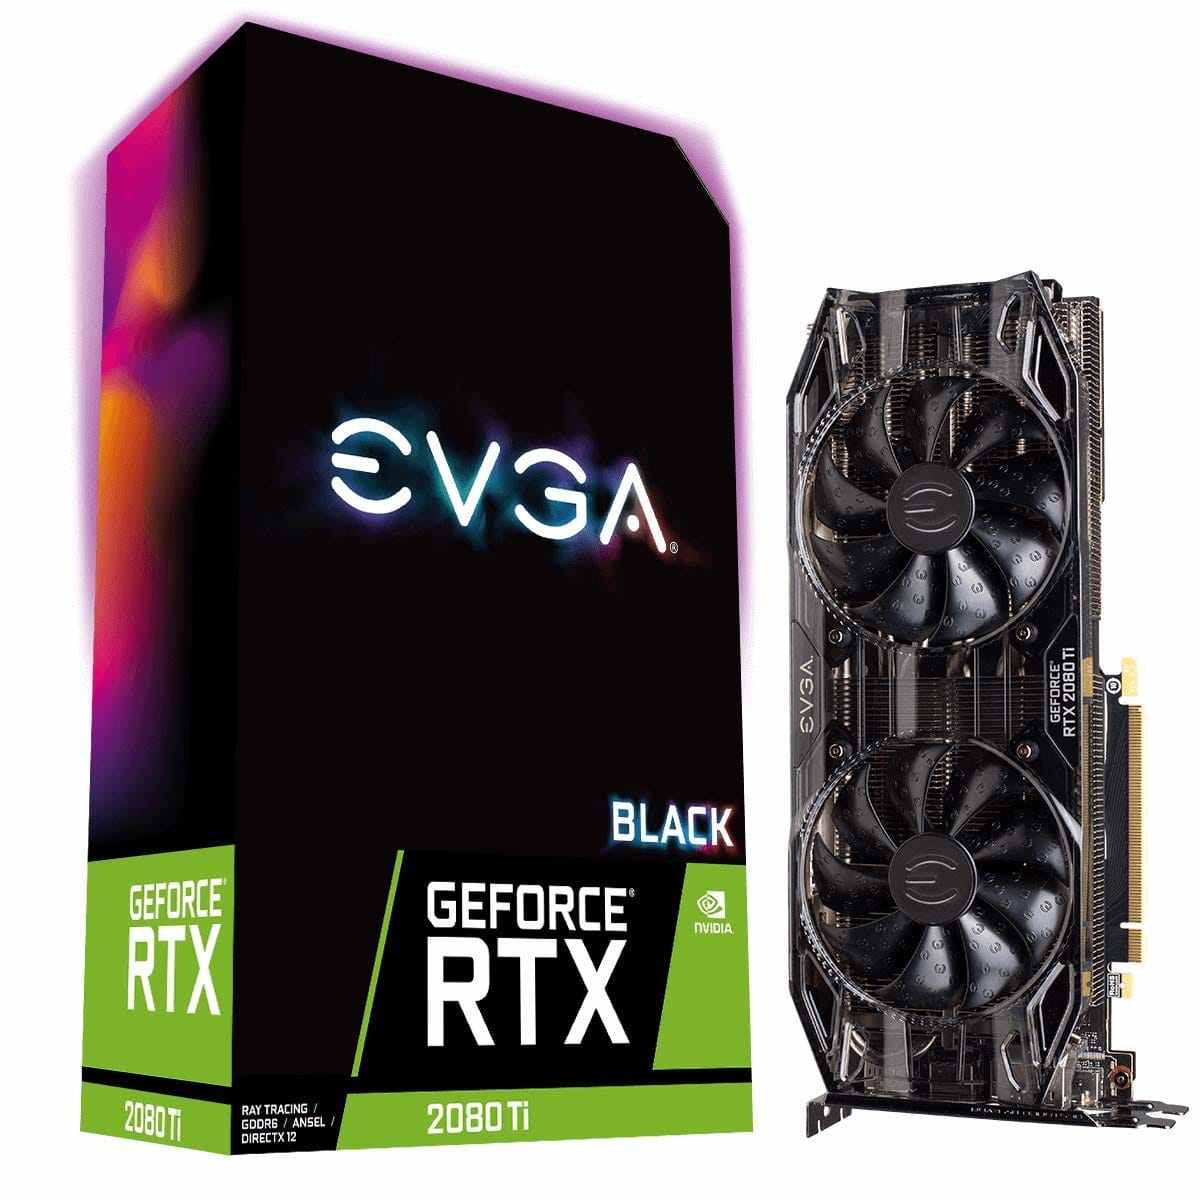 EVGA Nvidia RTX 2080 Ti Black Edition Gaming Graphics Card and Benchmarks - TurboFuture